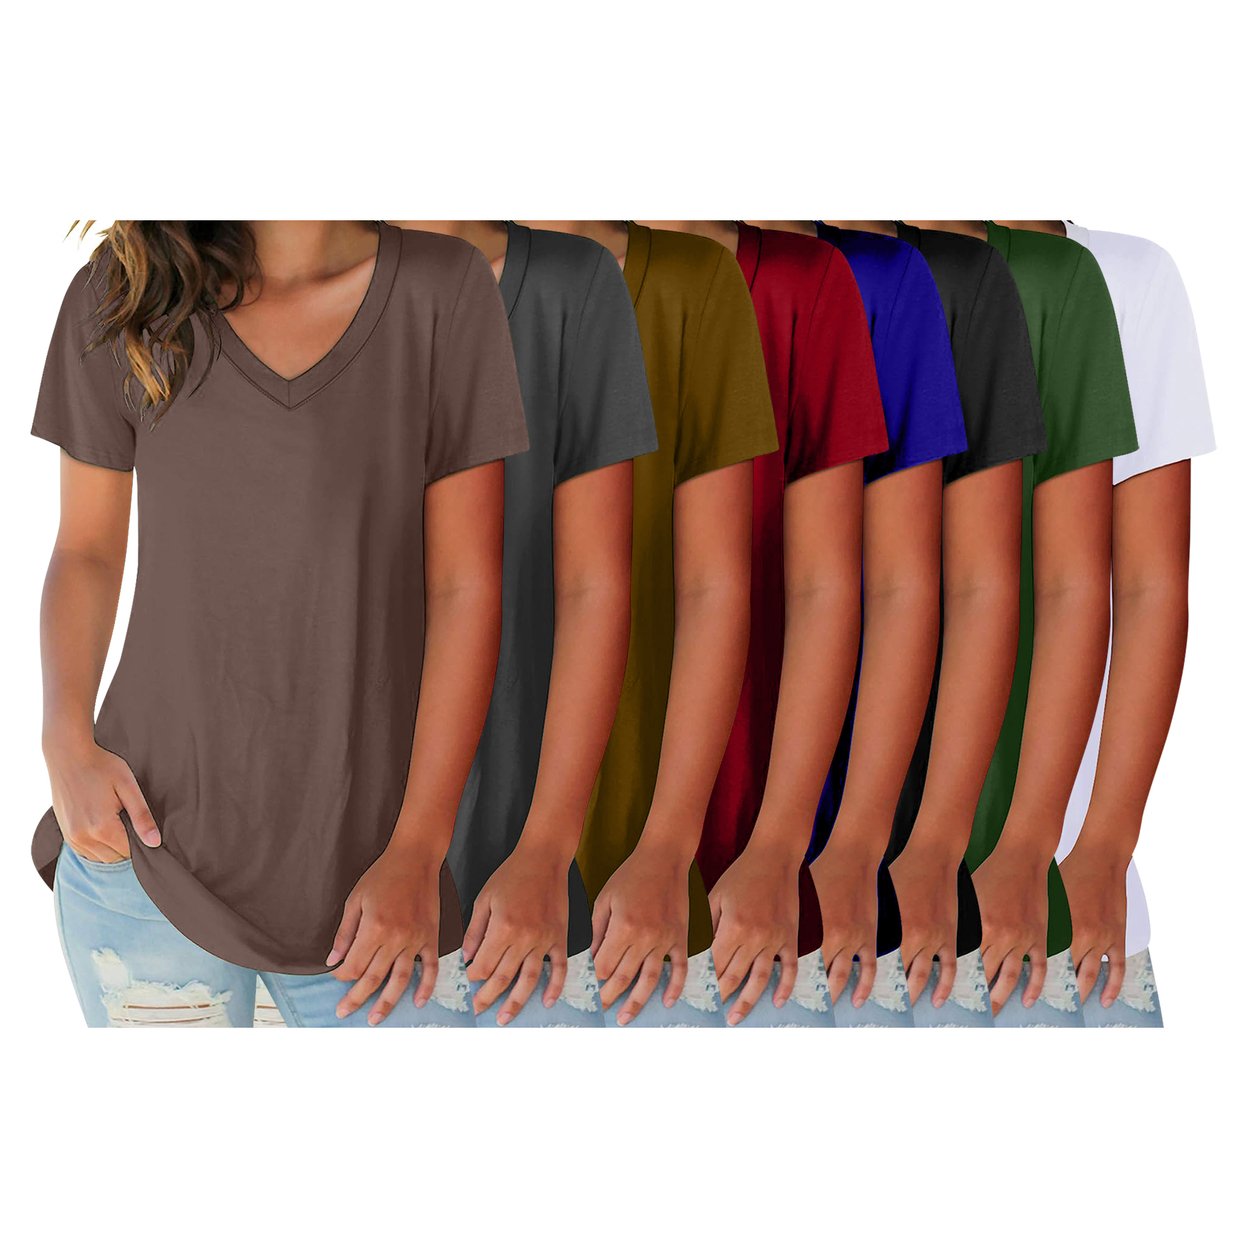 2-Pack: Women's Ultra Soft Smooth Cotton Blend Basic V-Neck Short Sleeve Shirts - Navy & Green, Large